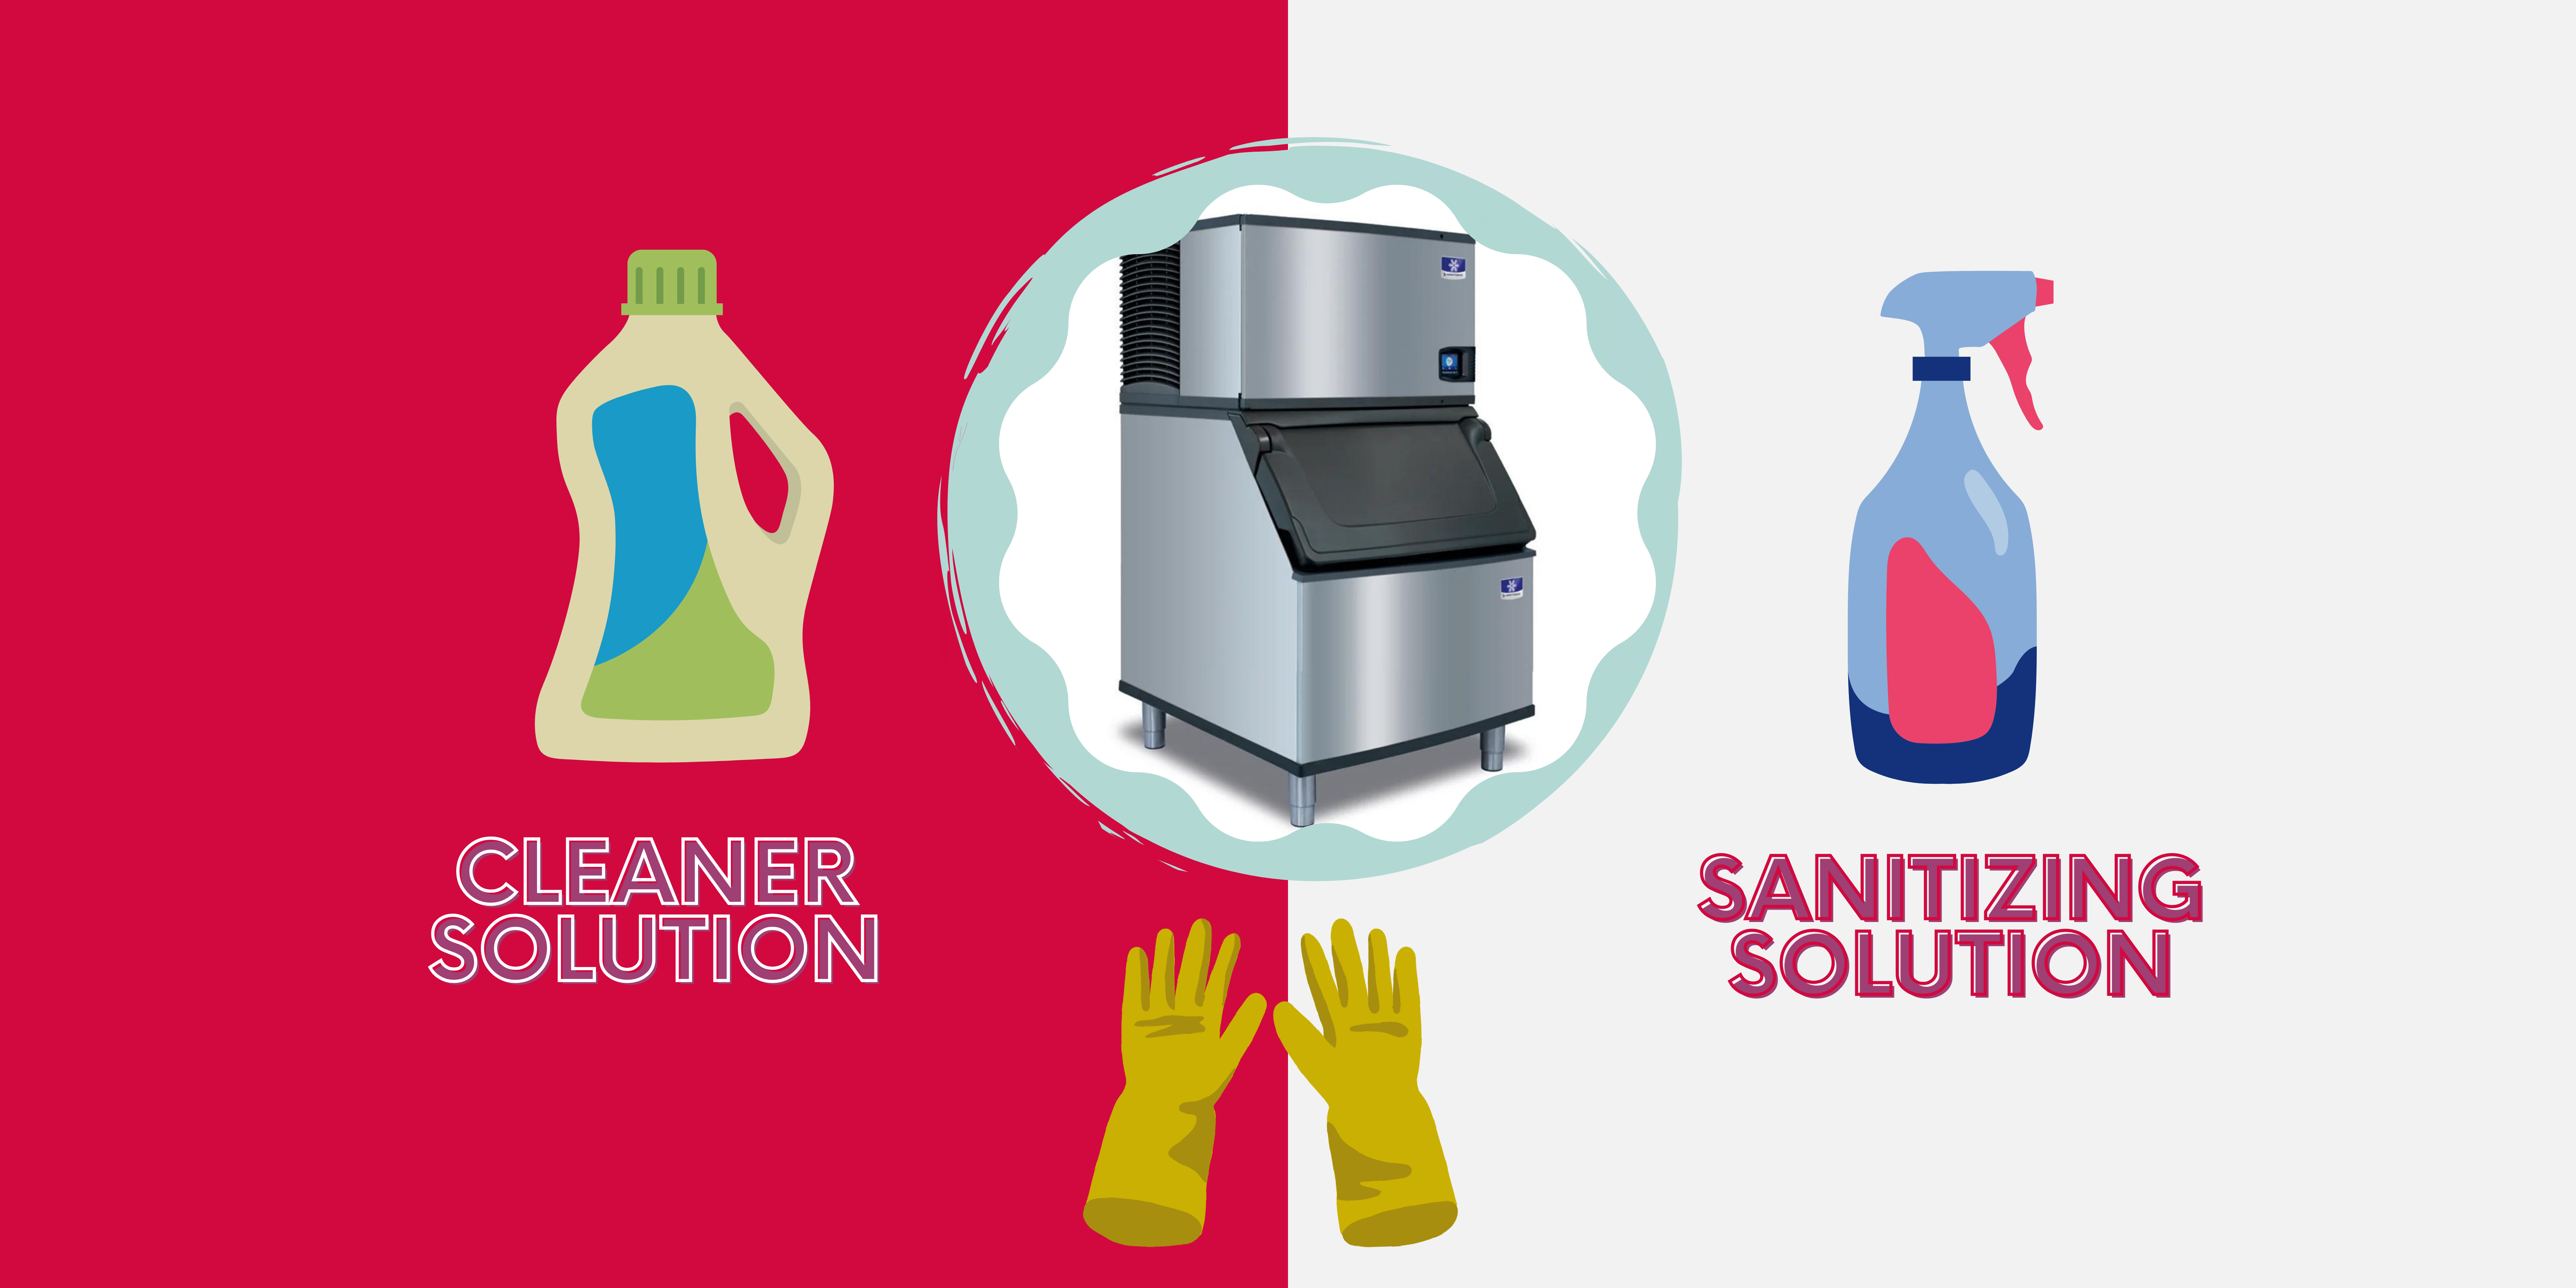 Food Service Maintenance Tips: Keeping Your Ice Machine Sanitary